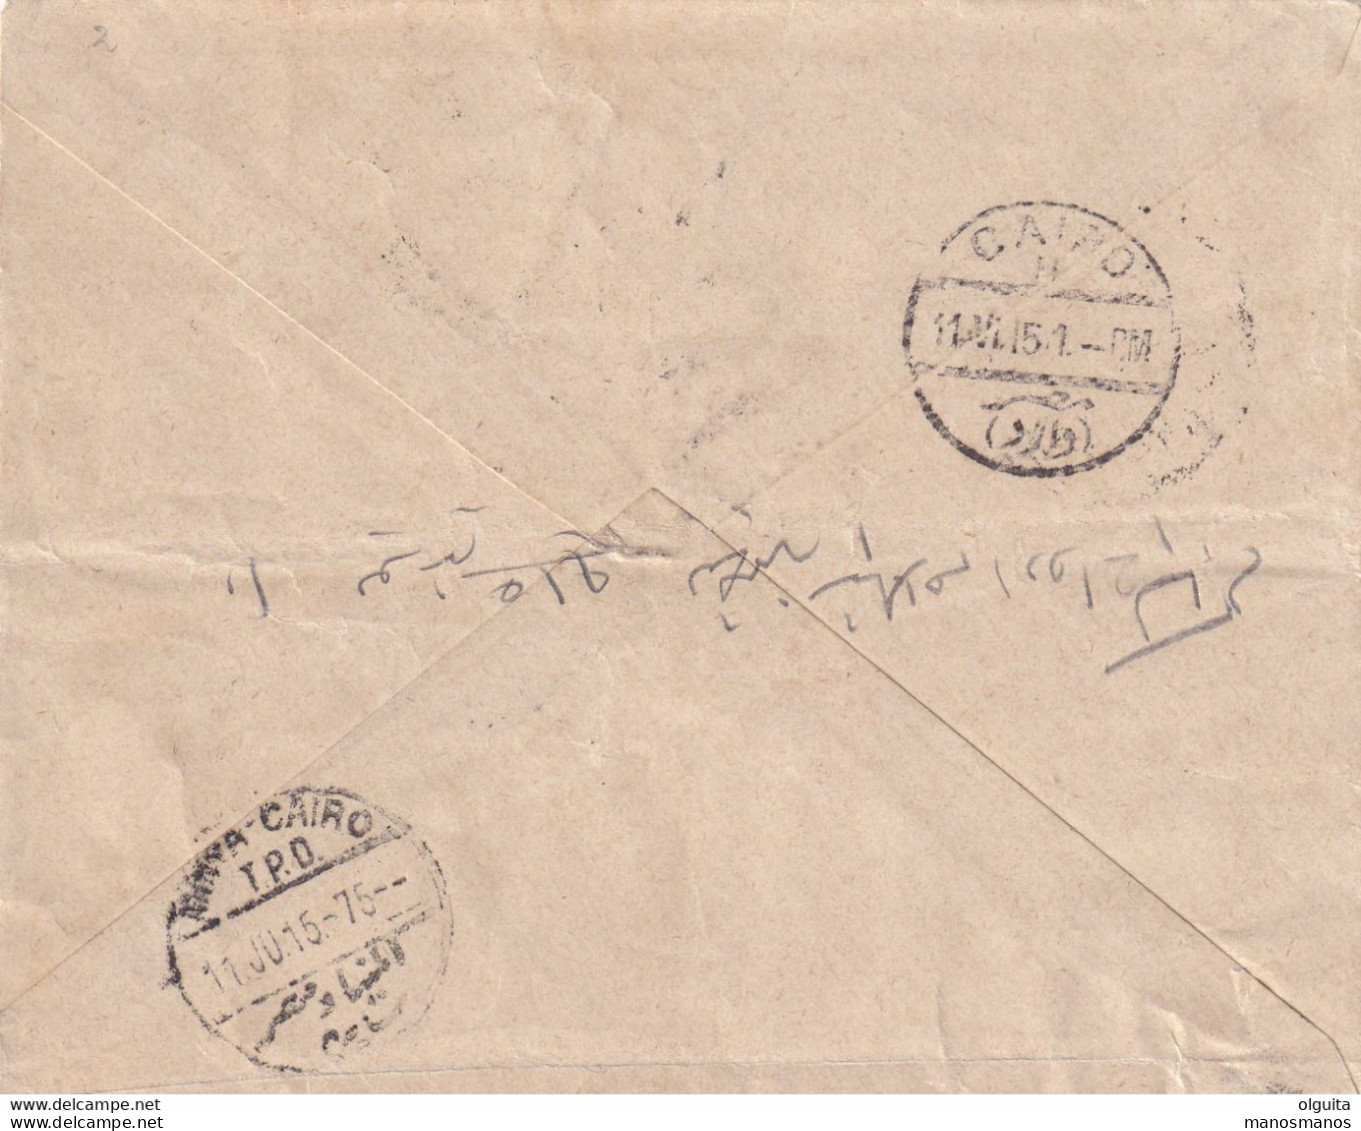 112/32 -- EGYPT TPO'S / AMBULANTS - Envelope DLR Pictorial Stamp Cancelled MEOUADDA 1915 MINYA-CAIRO TPO Nr 75 - 1915-1921 Protectorat Britannique